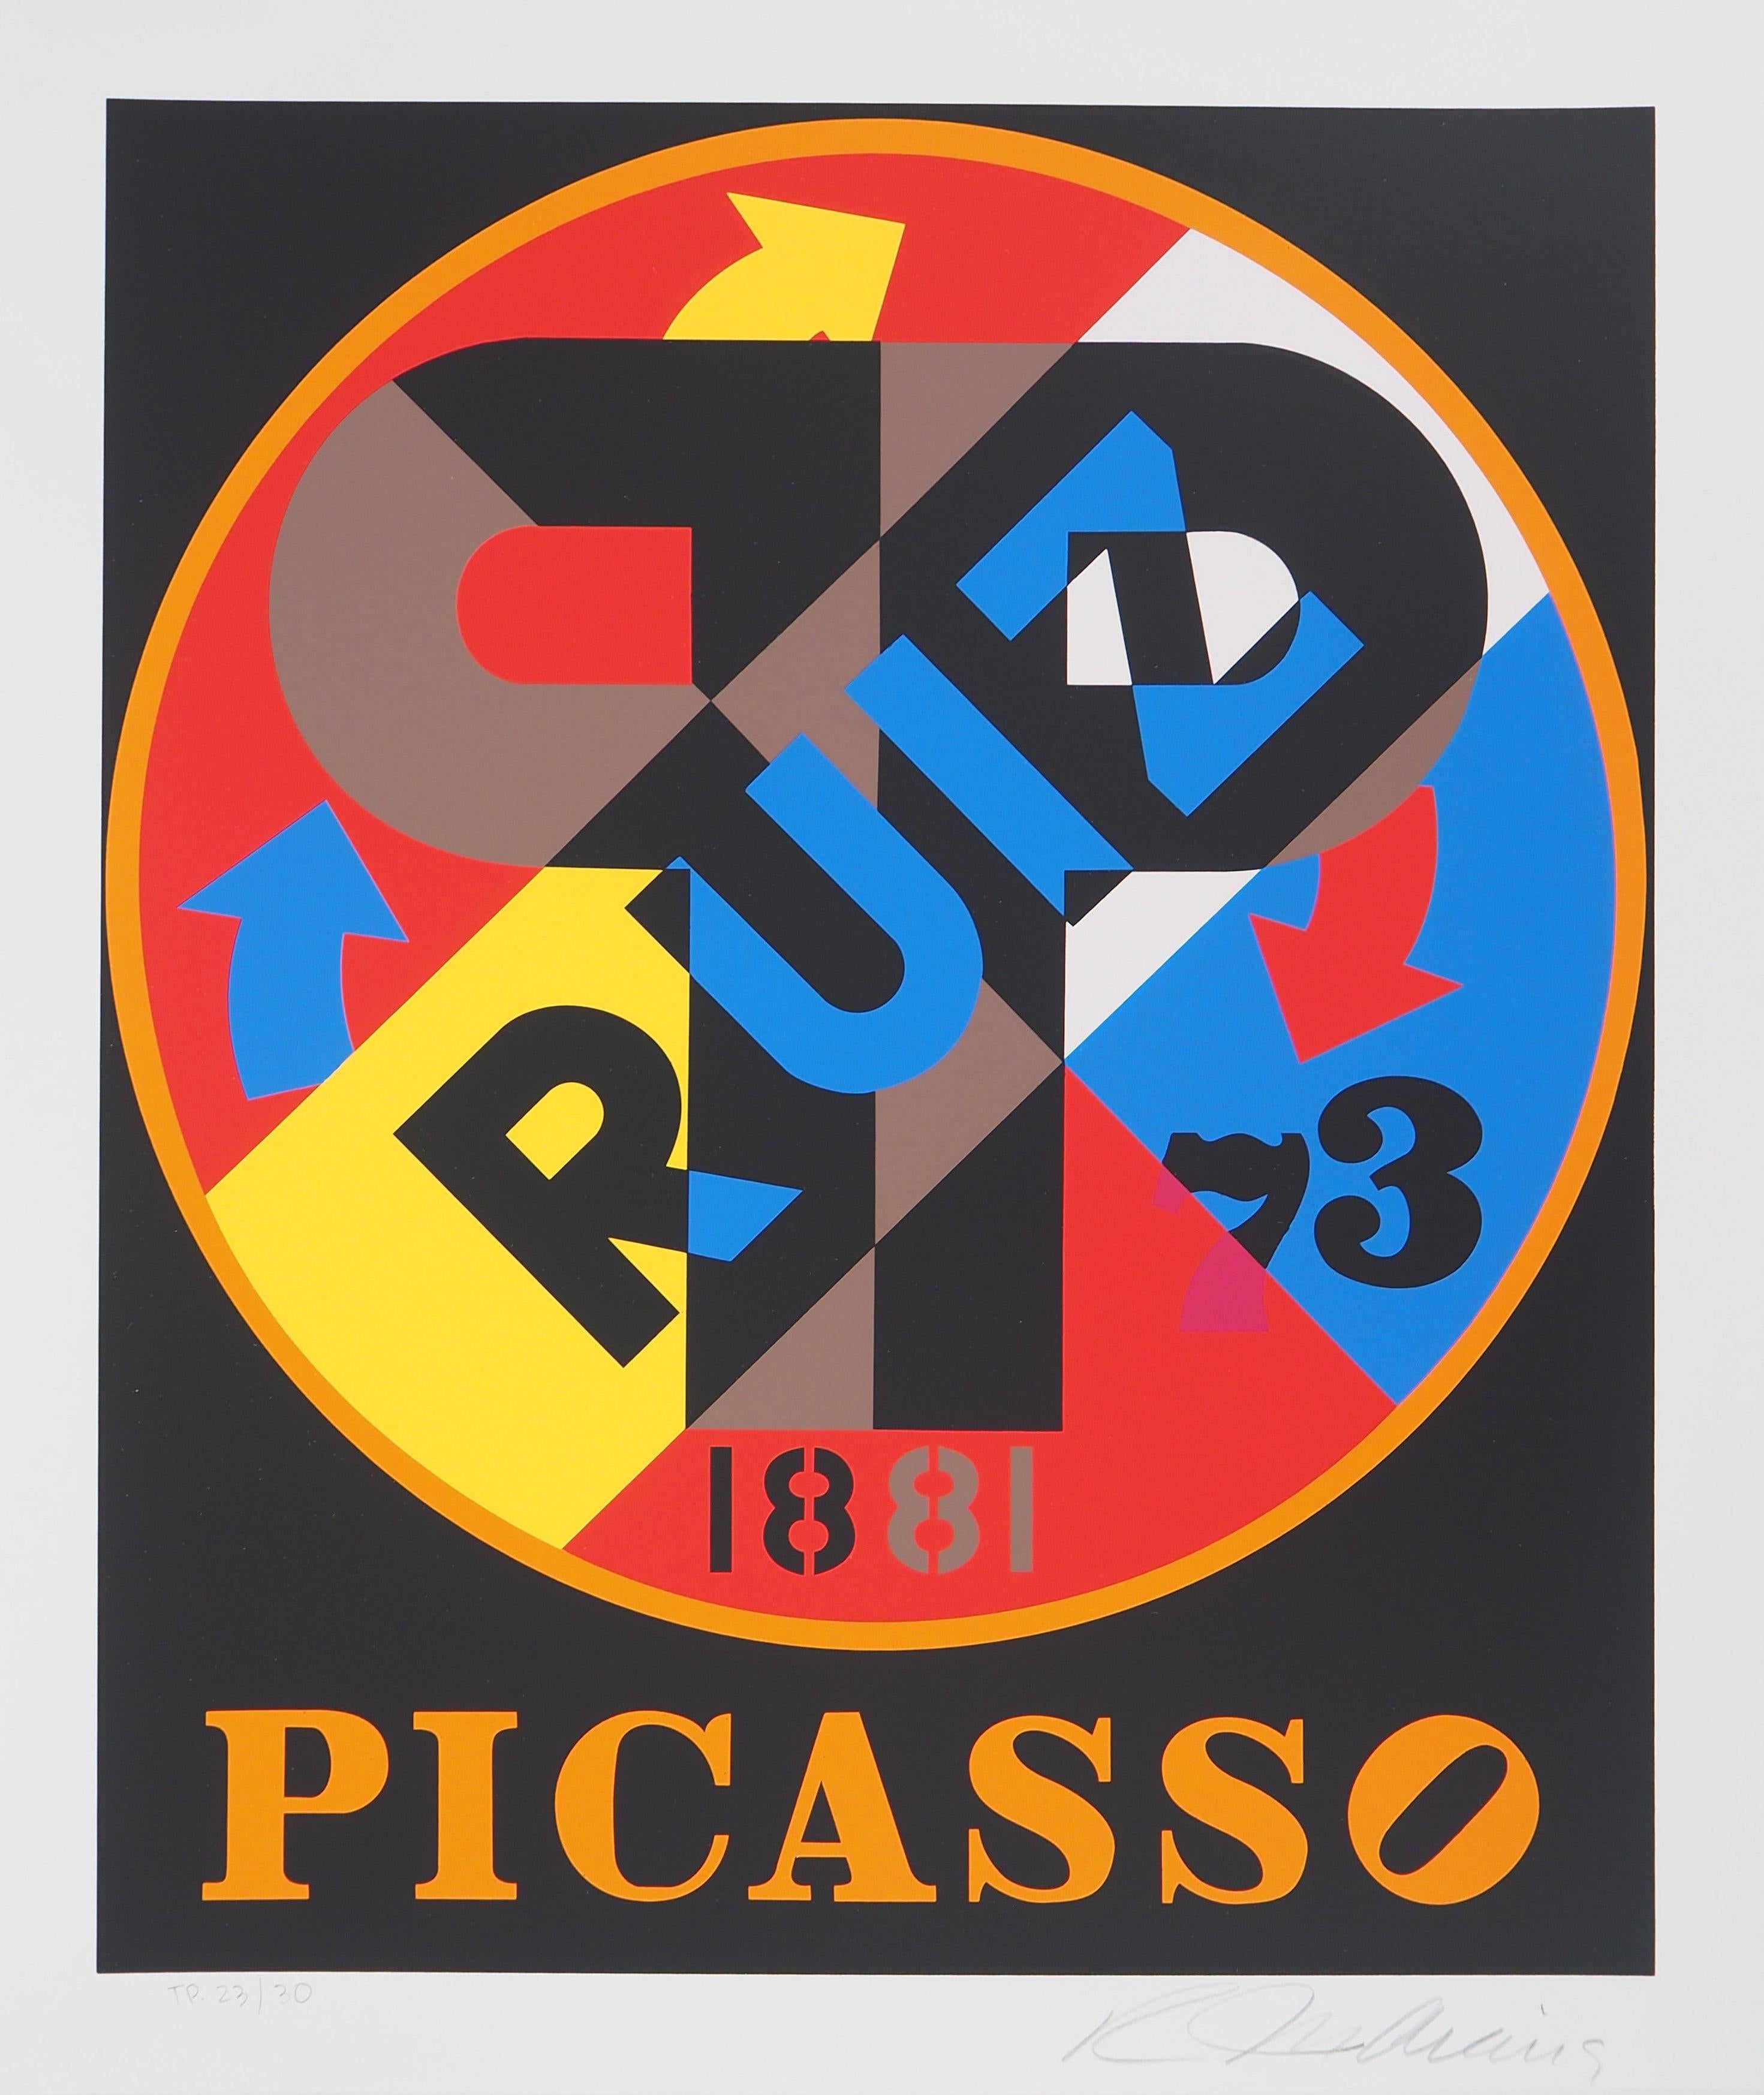 Robert Indiana Abstract Print - Picasso - Original screenprint, Handsigned - Certificate